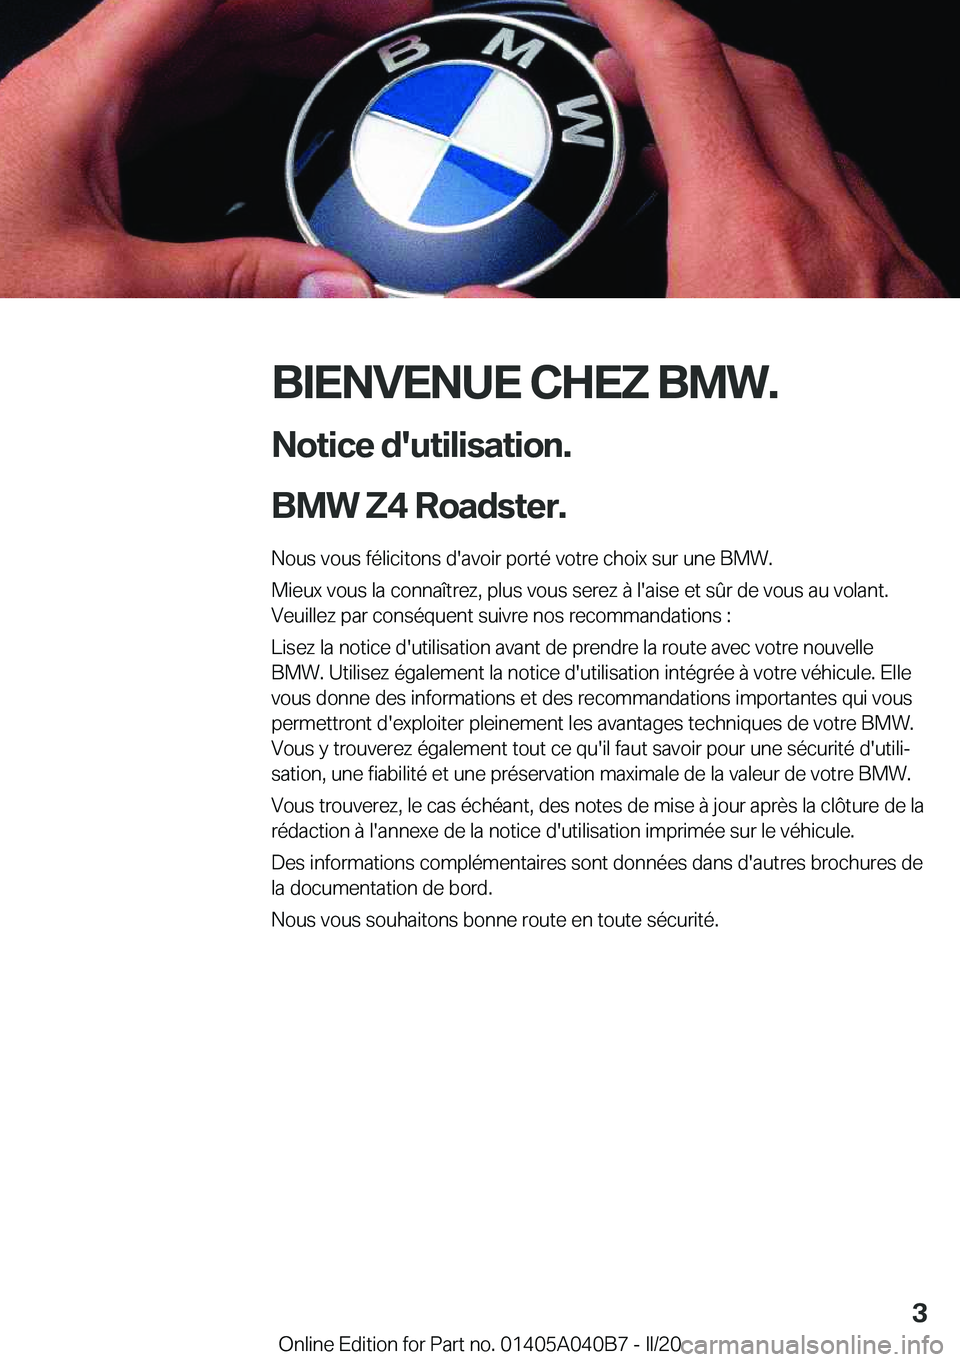 BMW Z4 2020  Notices Demploi (in French) �B�I�E�N�V�E�N�U�E��C�H�E�Z��B�M�W�.�N�o�t�i�c�e��d�'�u�t�i�l�i�s�a�t�i�o�n�.
�B�M�W��Z�4��R�o�a�d�s�t�e�r�.
�N�o�u�s��v�o�u�s��f�é�l�i�c�i�t�o�n�s��d�'�a�v�o�i�r��p�o�r�t�é��v�o�t